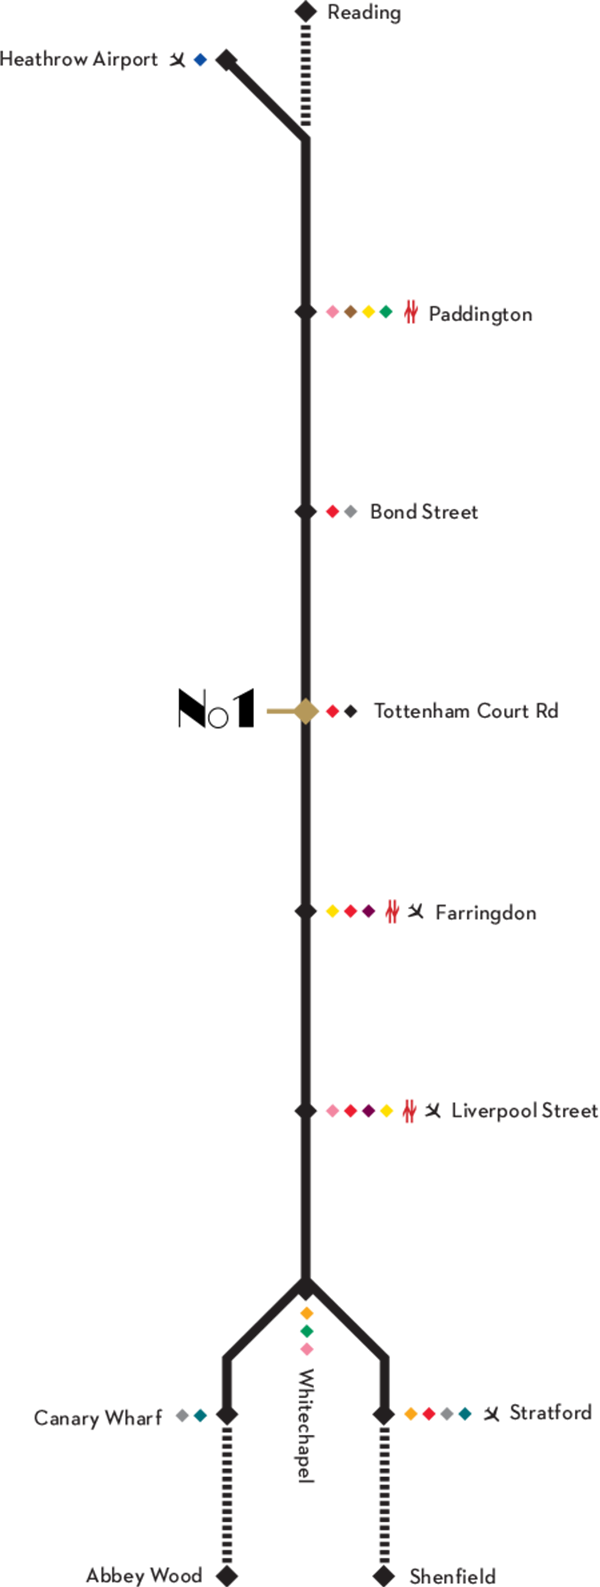 Crossrail map